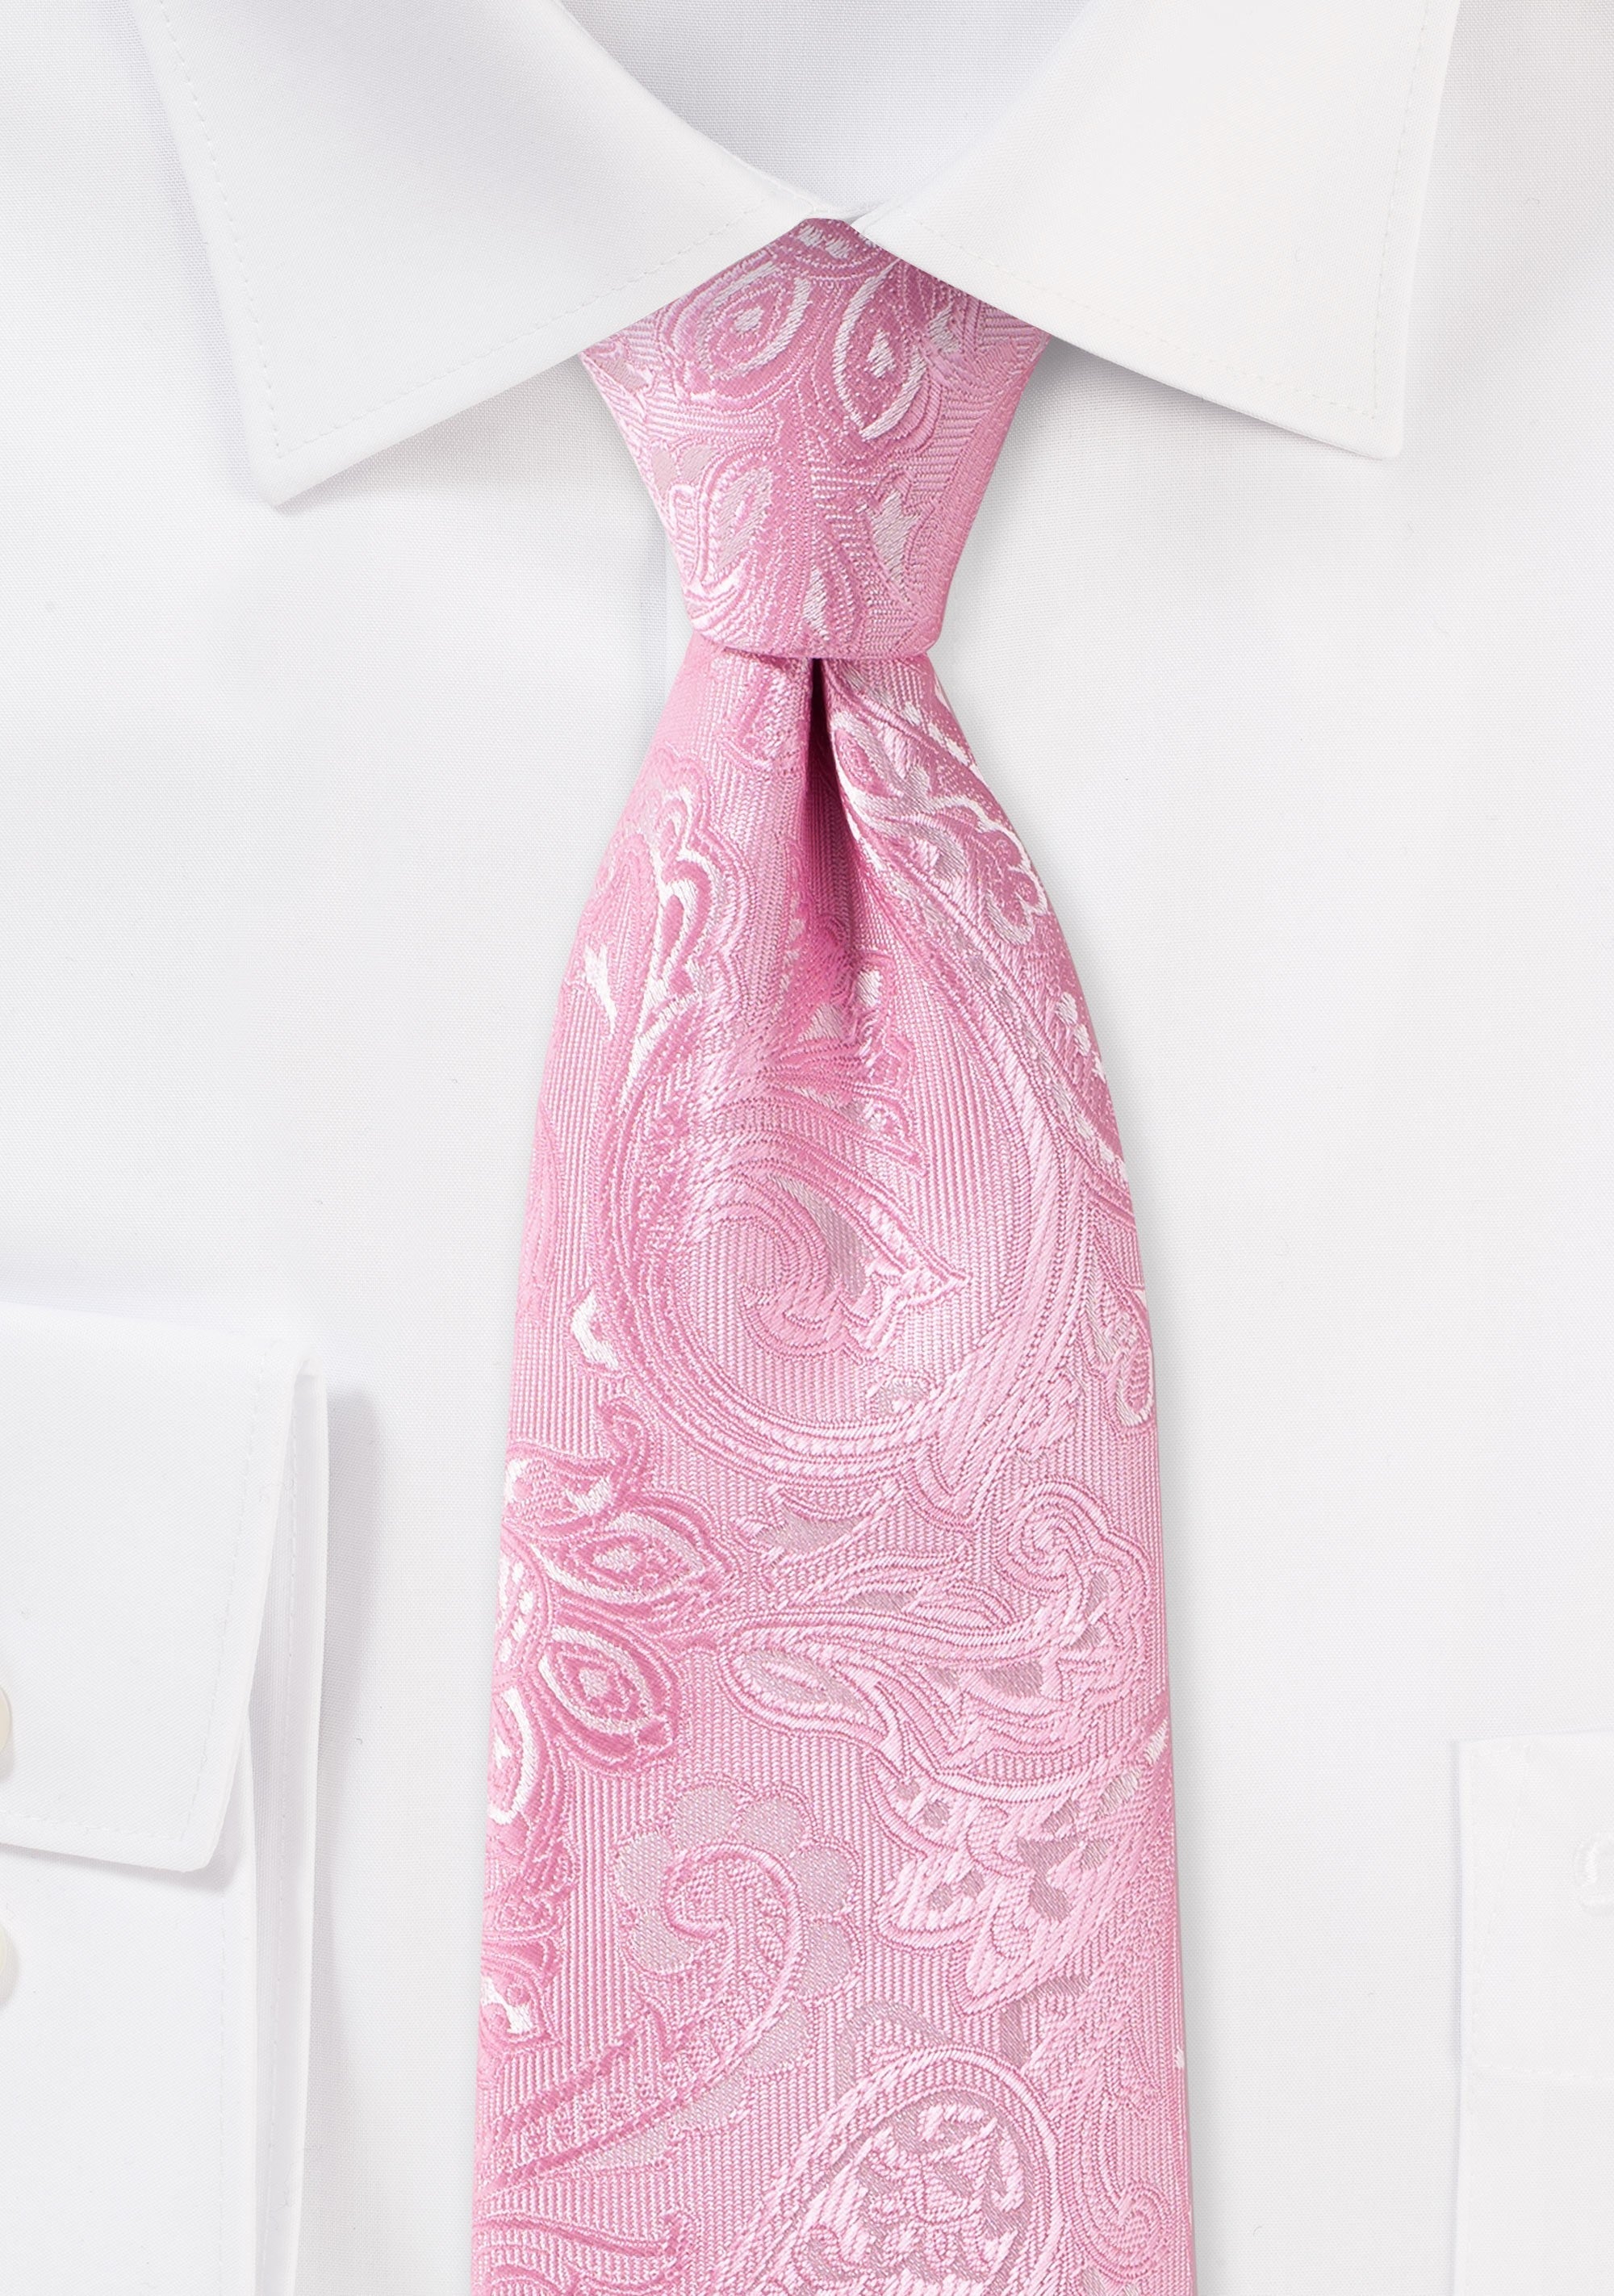 Carnation Pink Proper Paisley Necktie